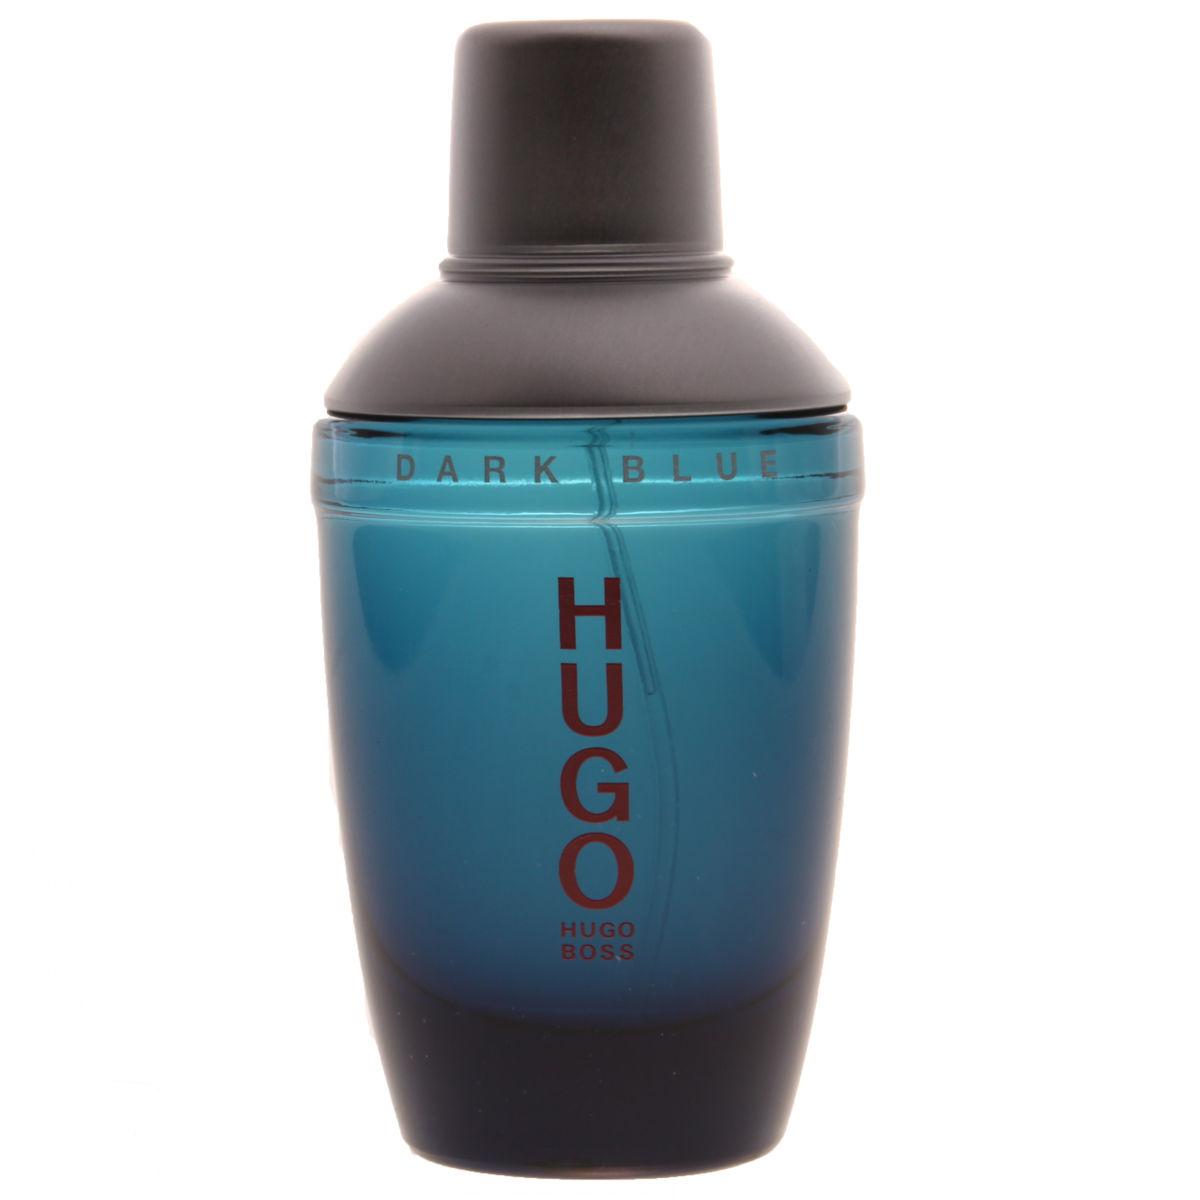 dark blue hugo